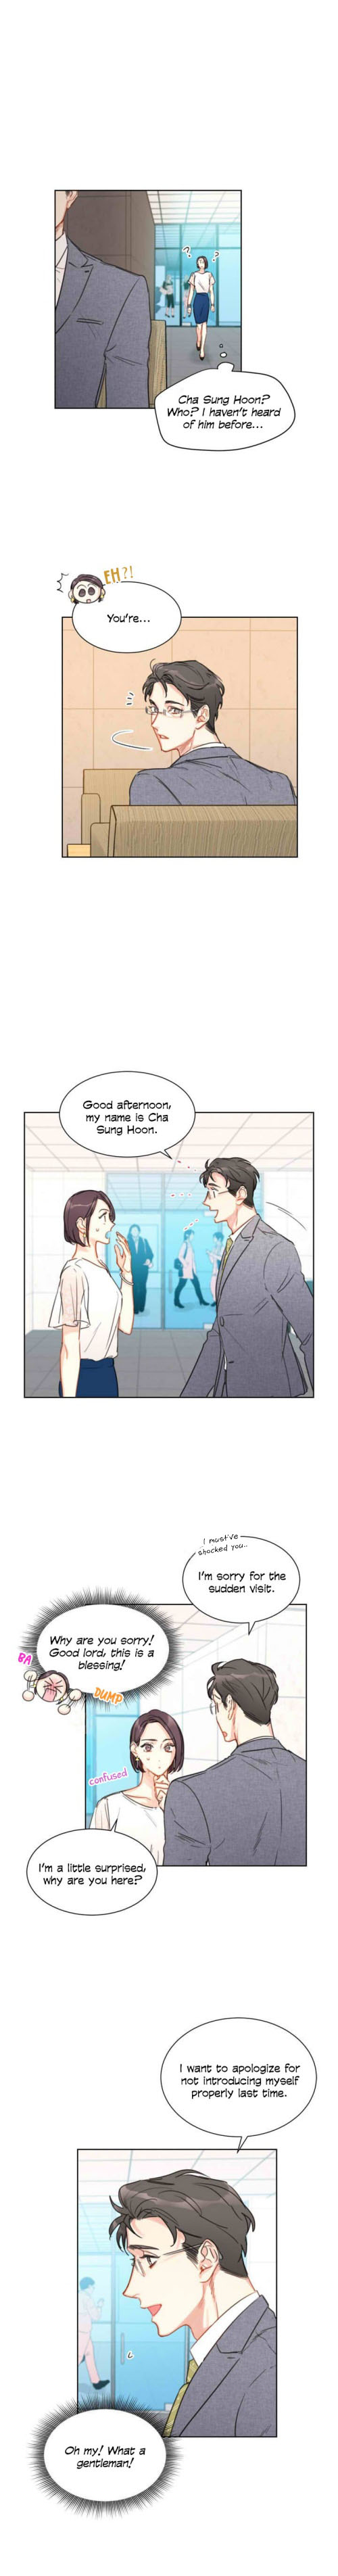 The office blind date manga online